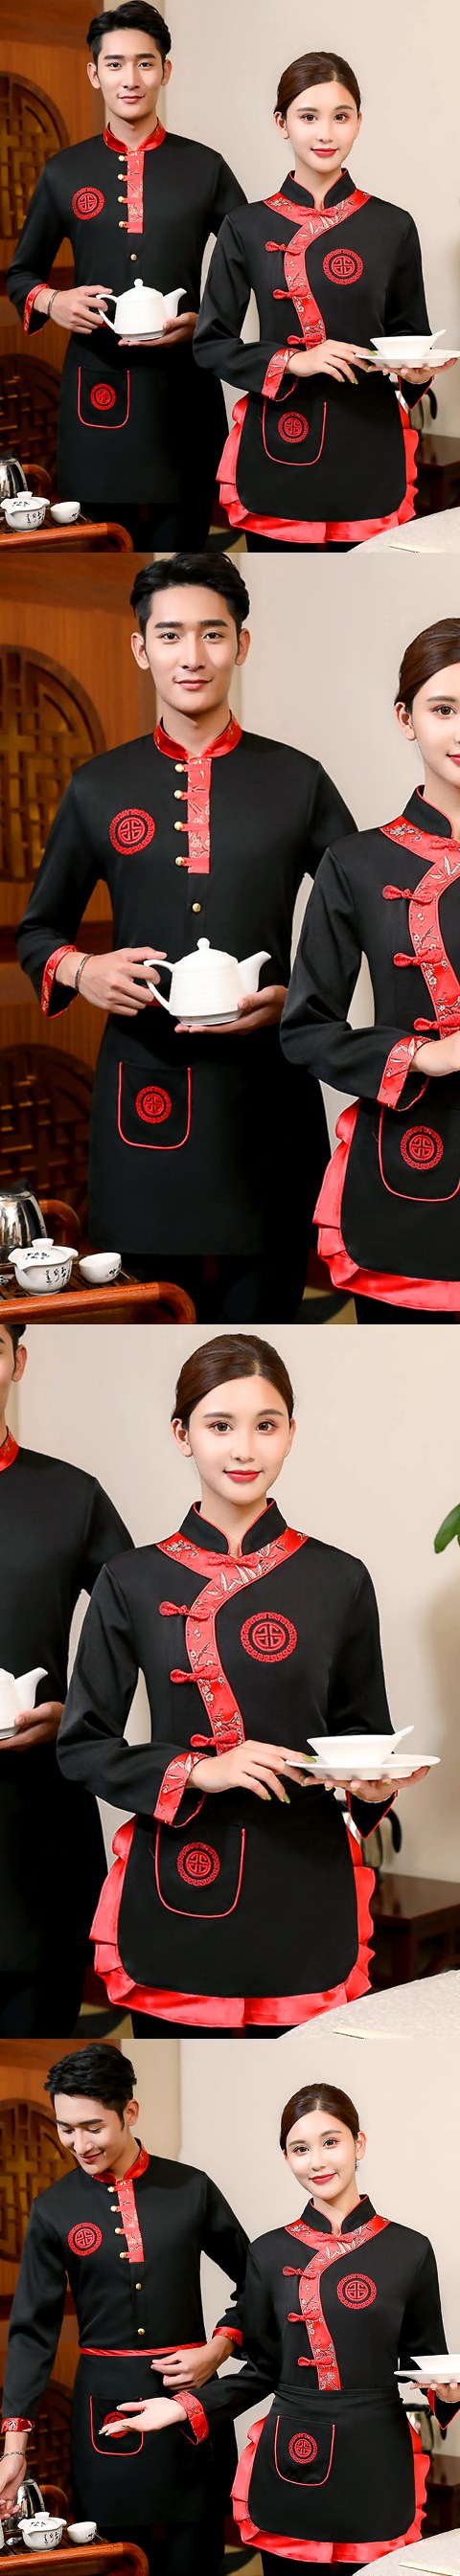 Mandarin Style Restaurant Uniform-Top